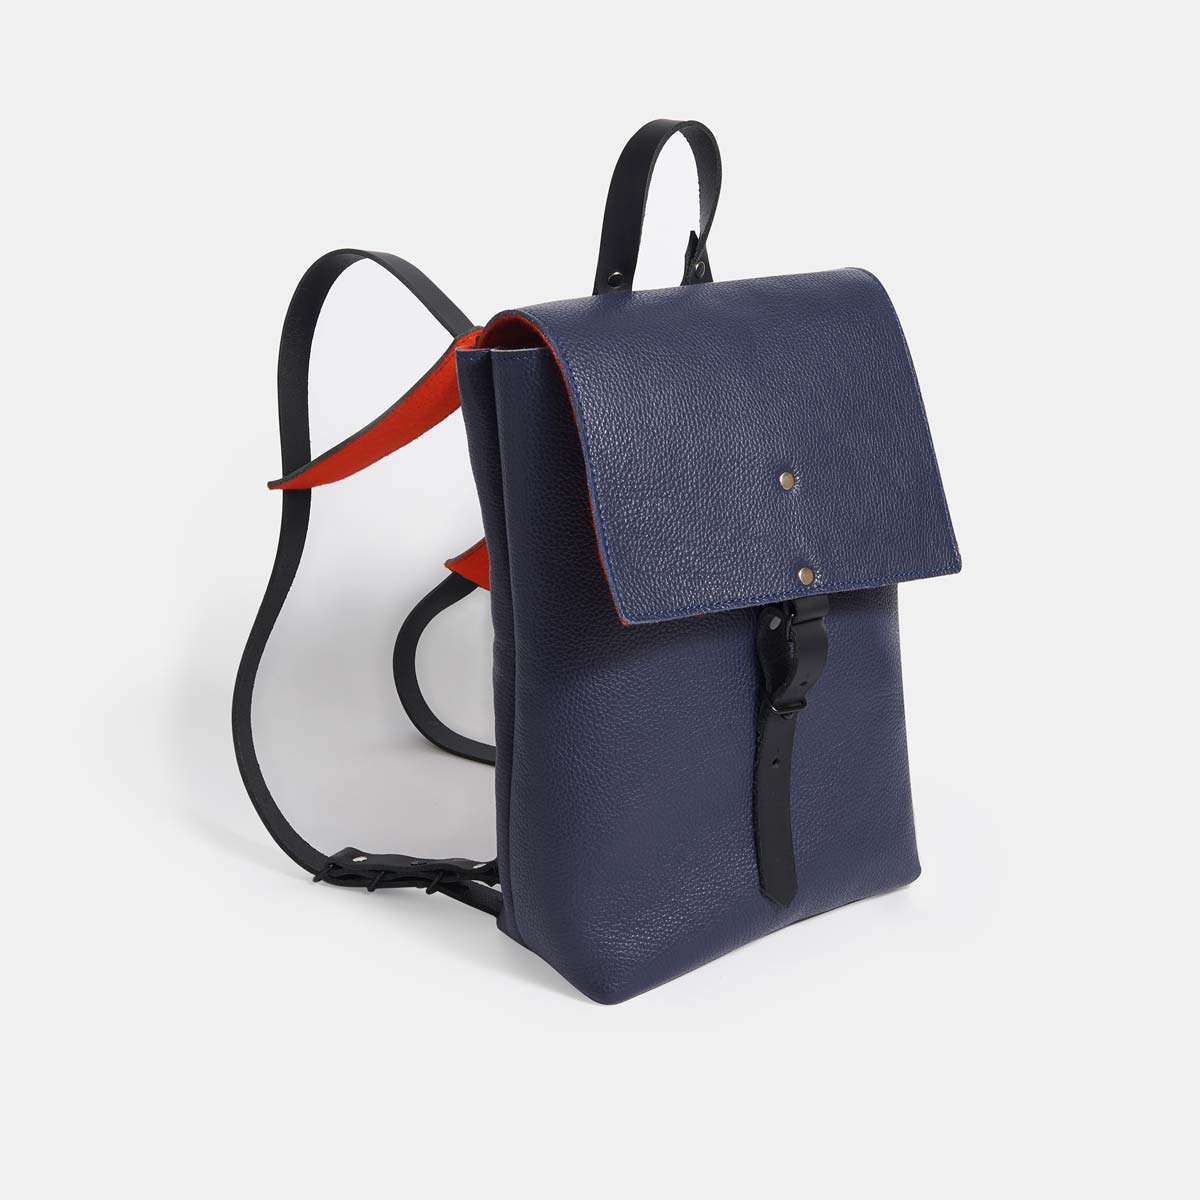 Italian Leather and Wool Felt Backpack - Navy Blue and Orange - RYAN London